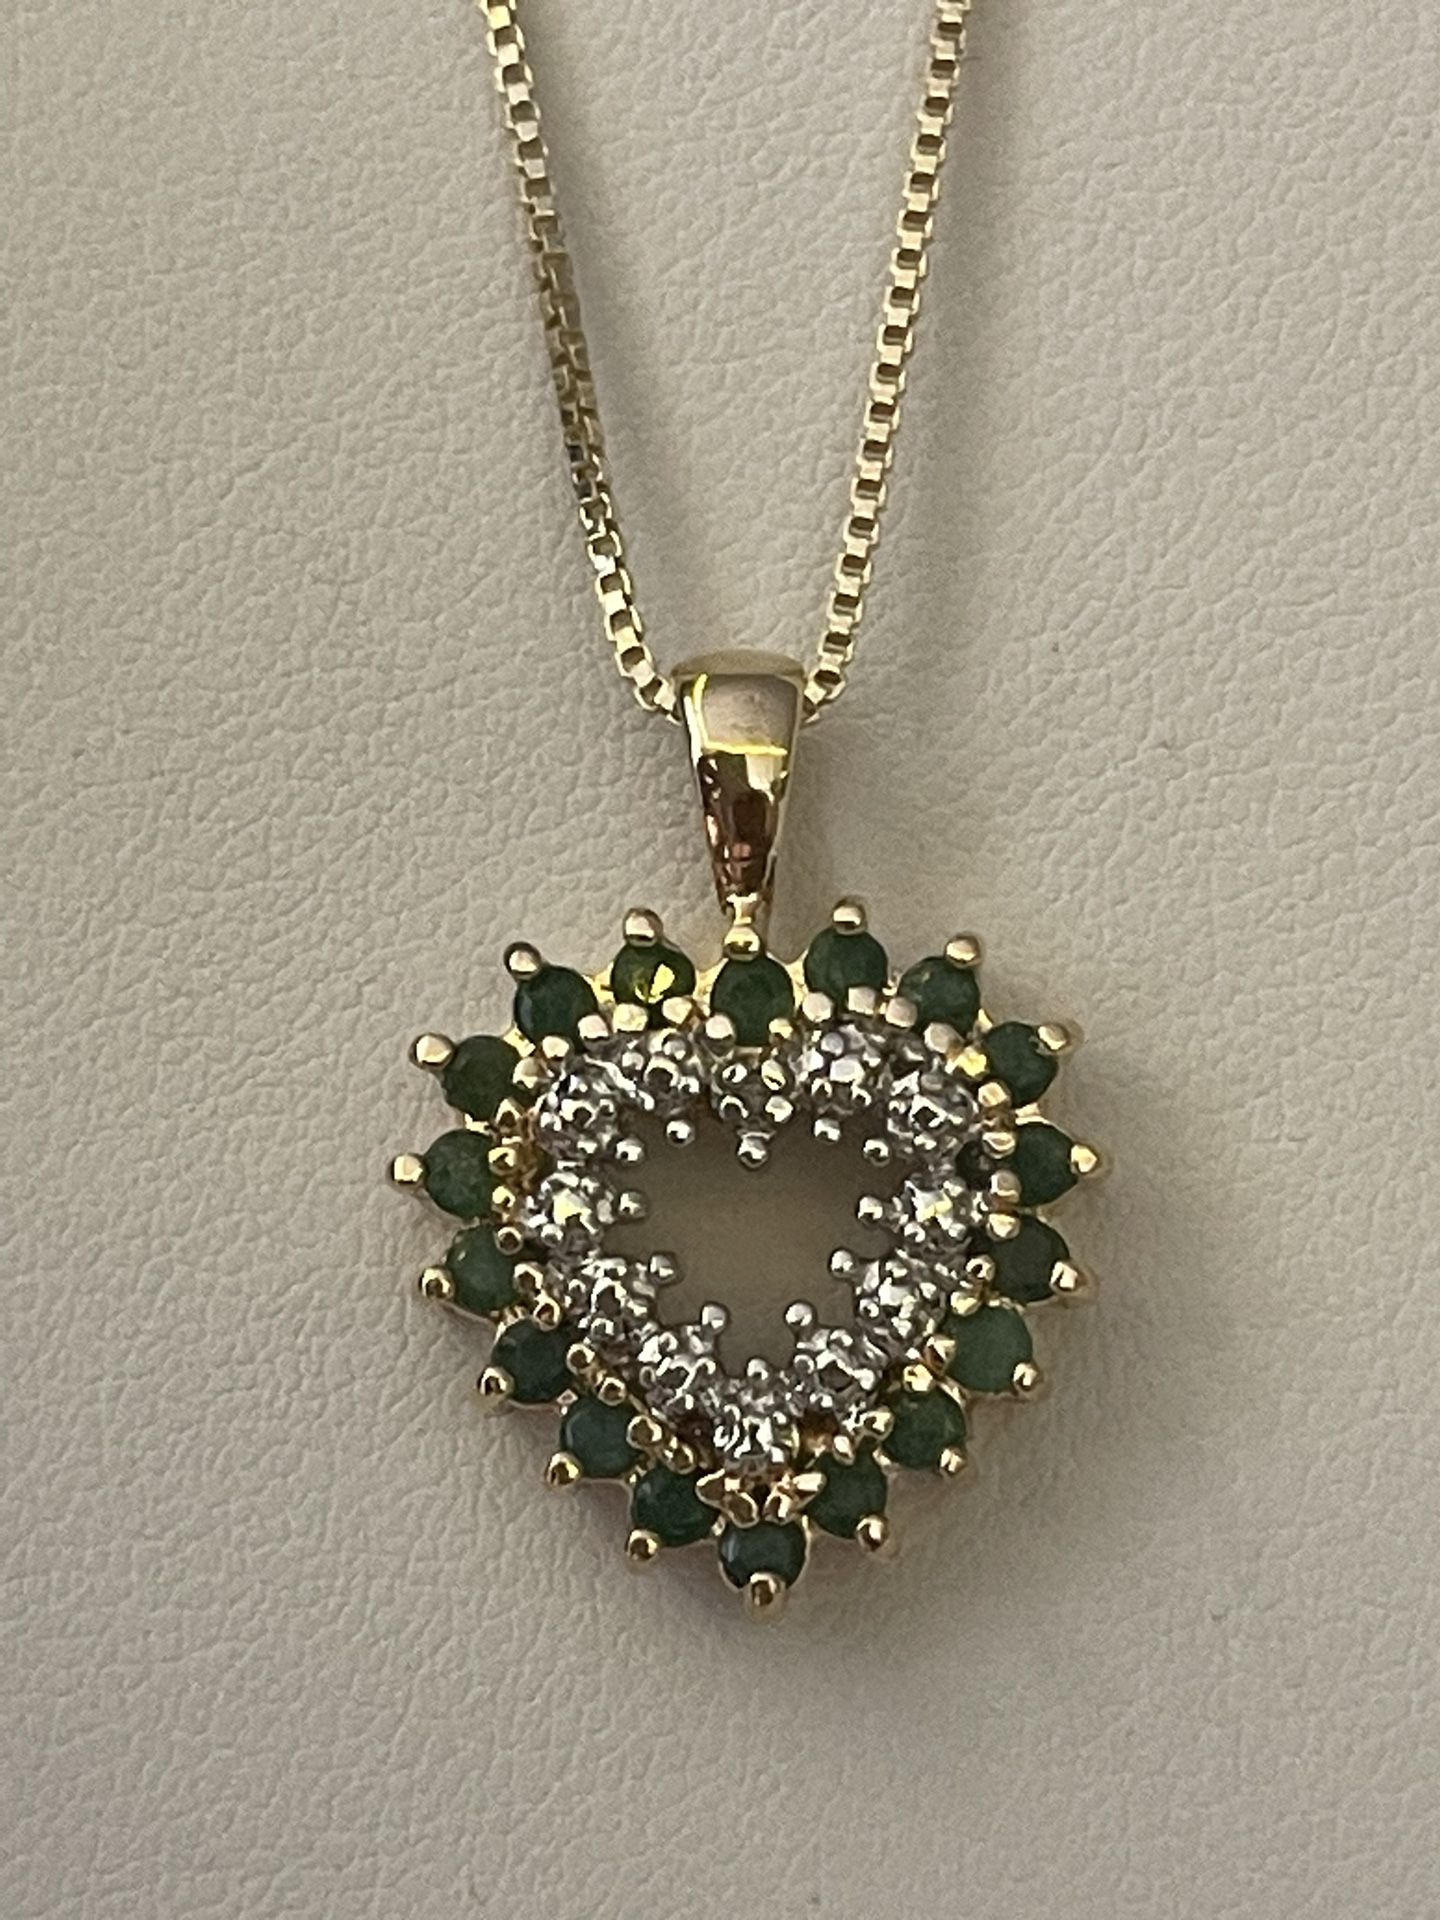 Sterling Silver Emerald & Diamond Accent Heart 18”Box Chain Necklace